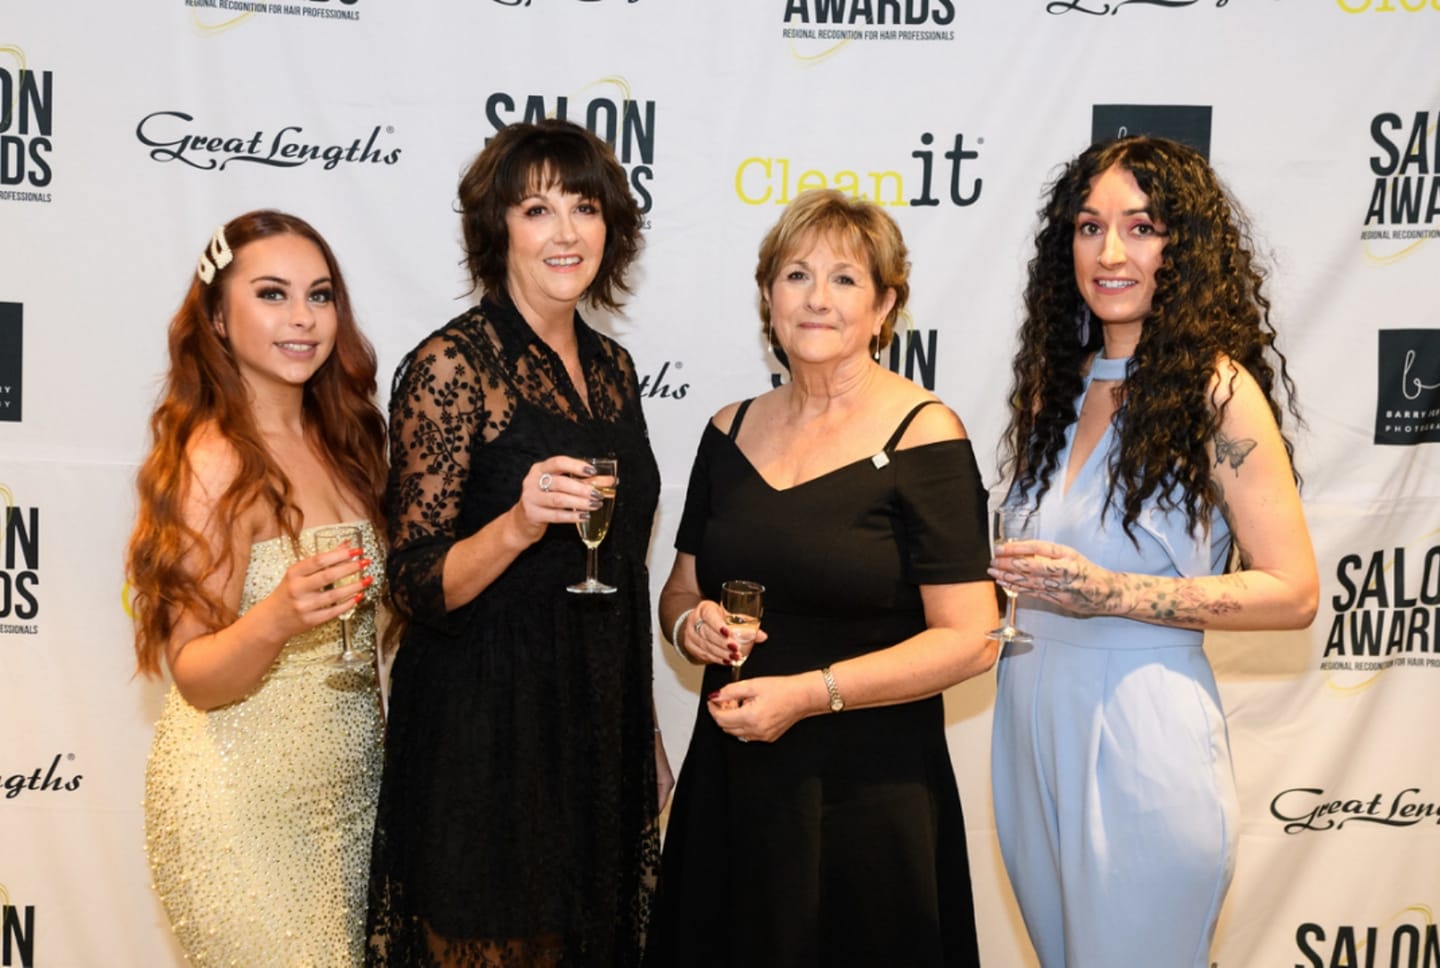 Hampshire salon awards 2019